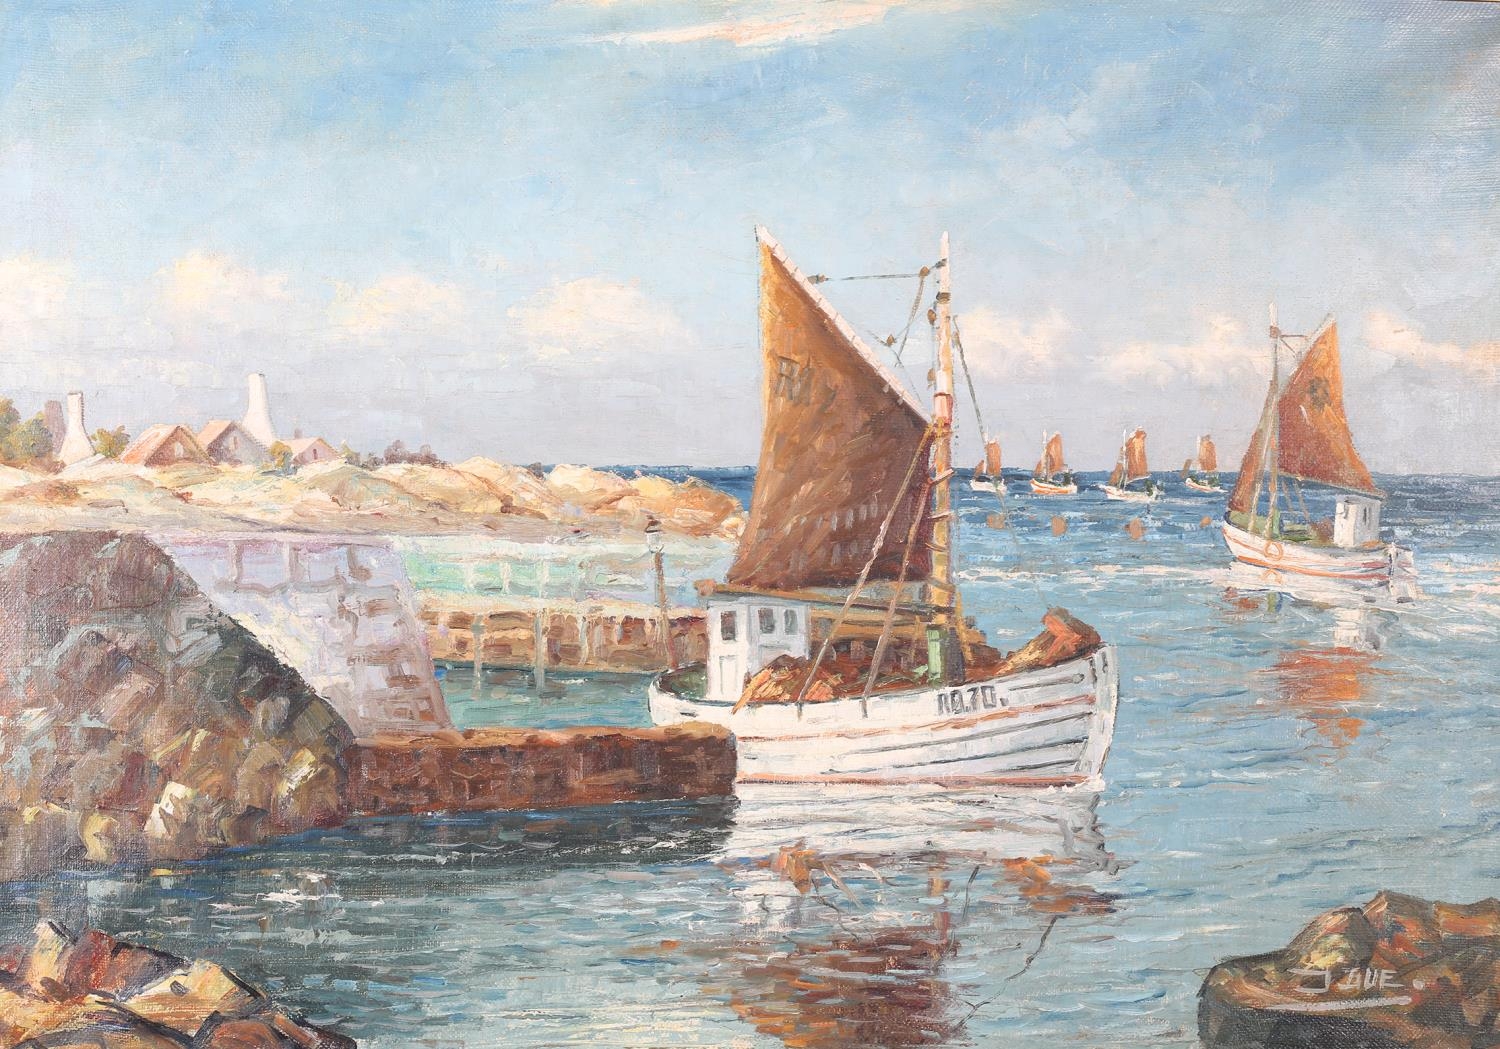 J*ue (Mid-20th century), Danish, Danish coastal scene with fishing boats heading out to sea, oil